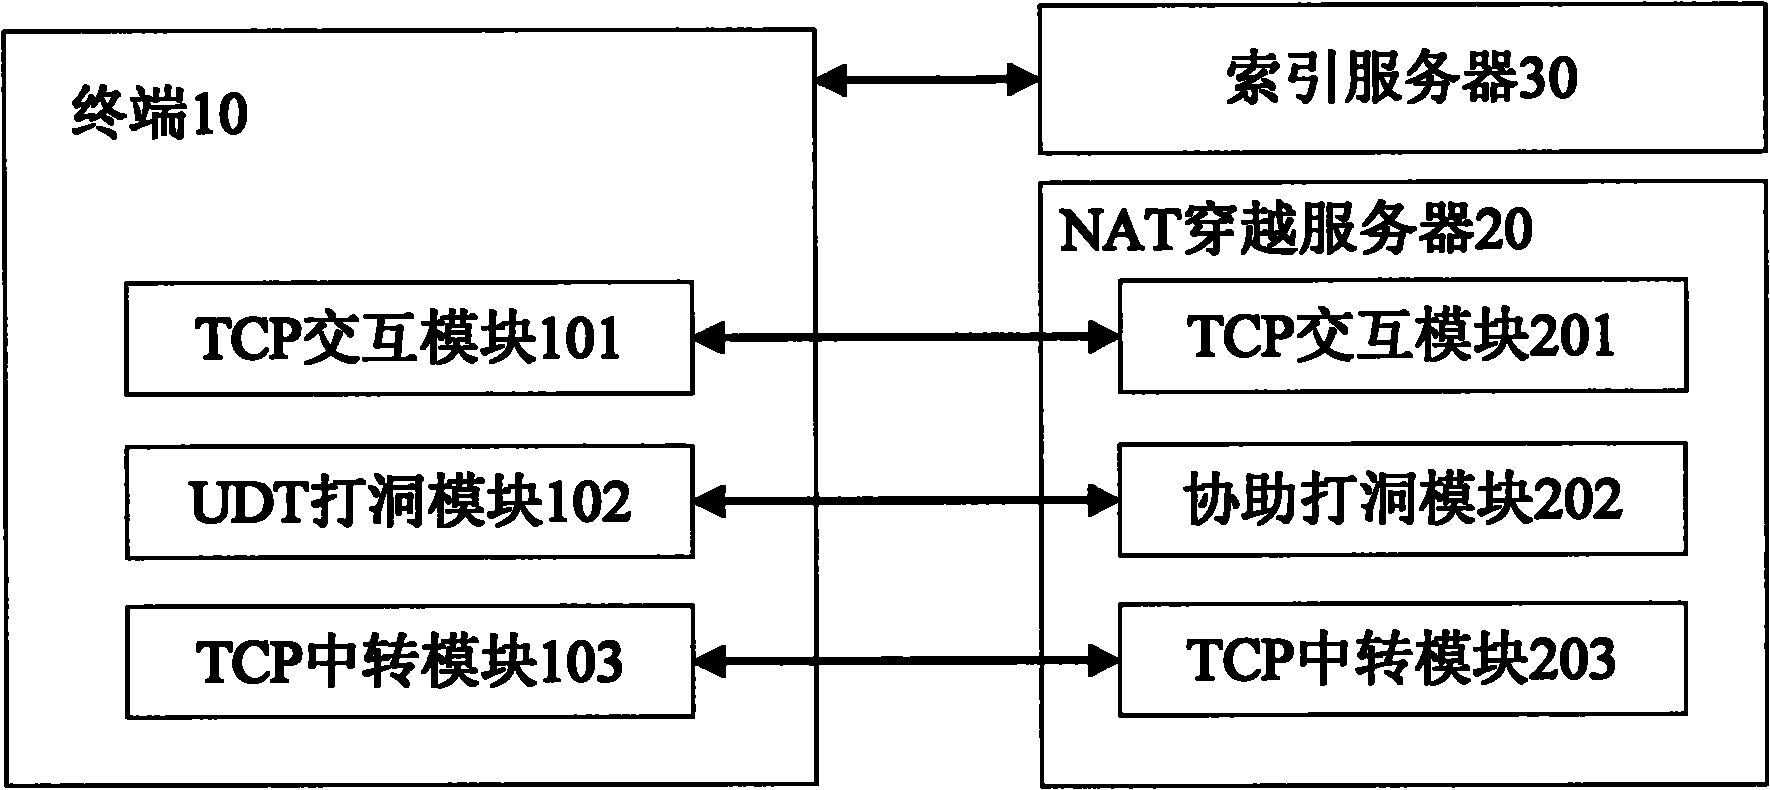 System and method for realizing NAT (Network Address Translation) traversal on basis of UDT (UDP (User Datagram Protocol)-based Data Transfer) and TCP (Transmission Control Protocol) transfer